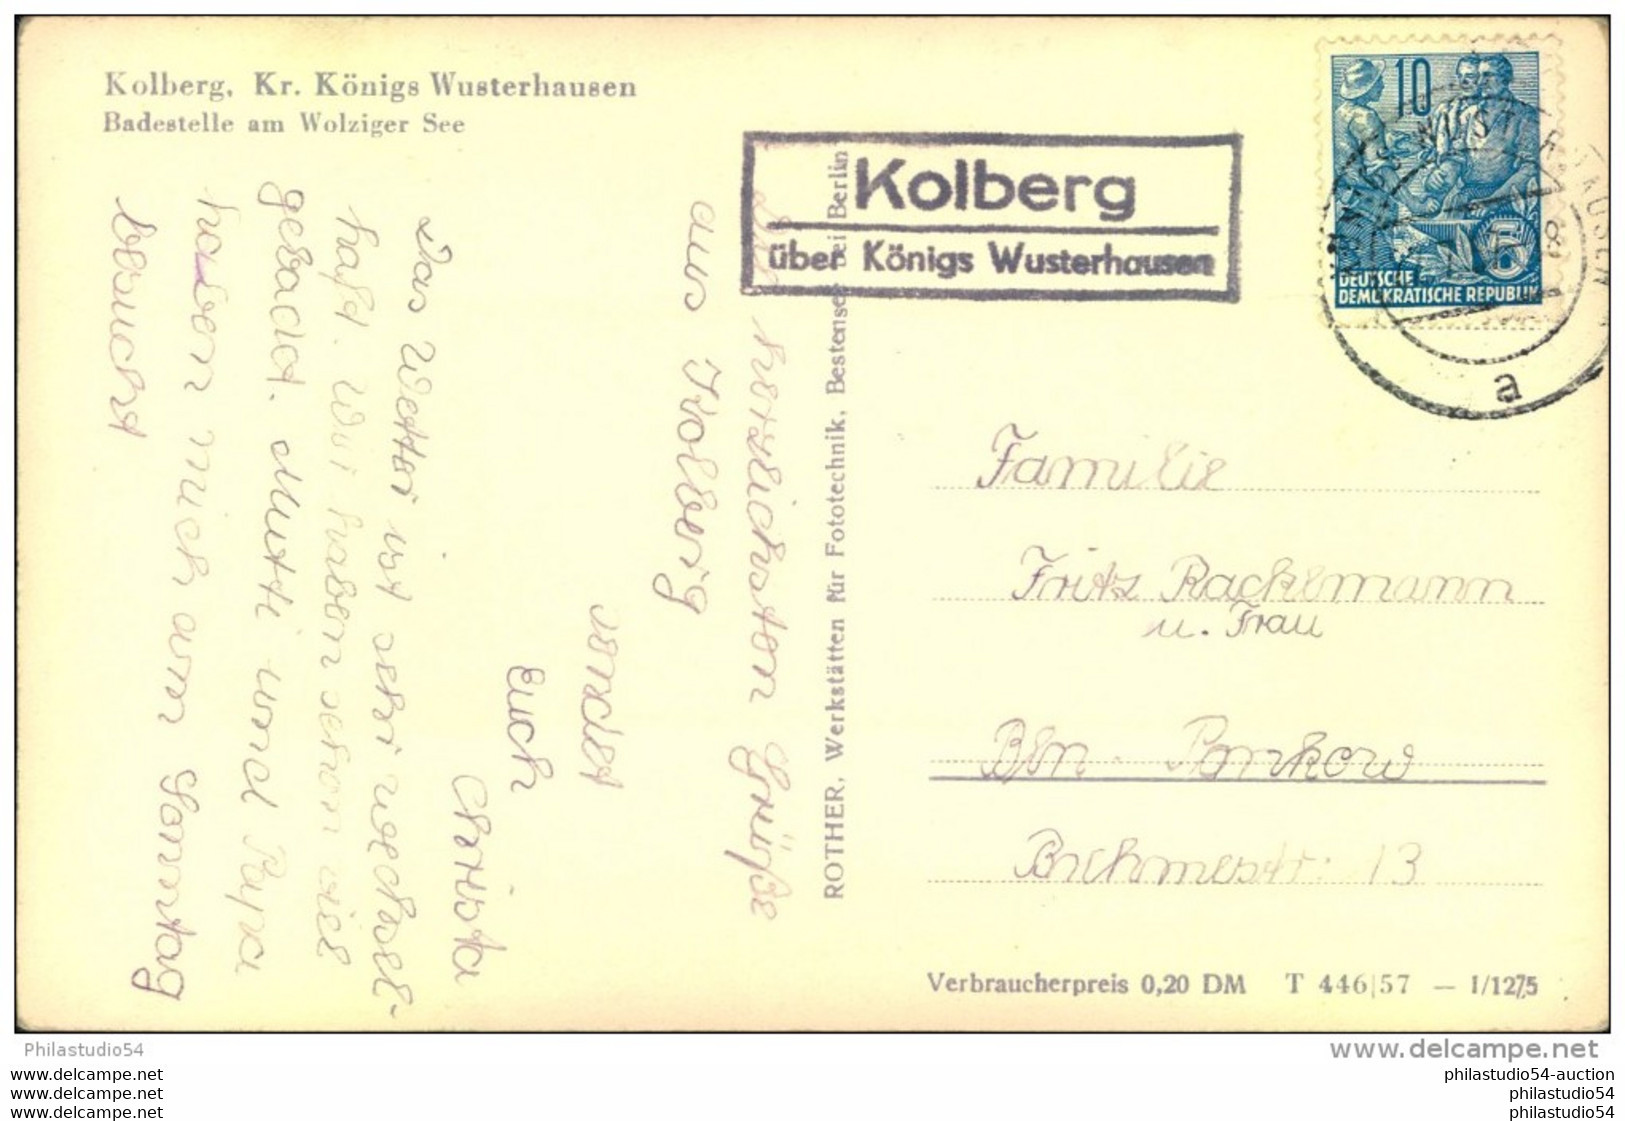 Brandenburg : 1957, Postkarte Posthilfsstelle "Kolberg über Königs Wusterhausen" - Macchine Per Obliterare (EMA)